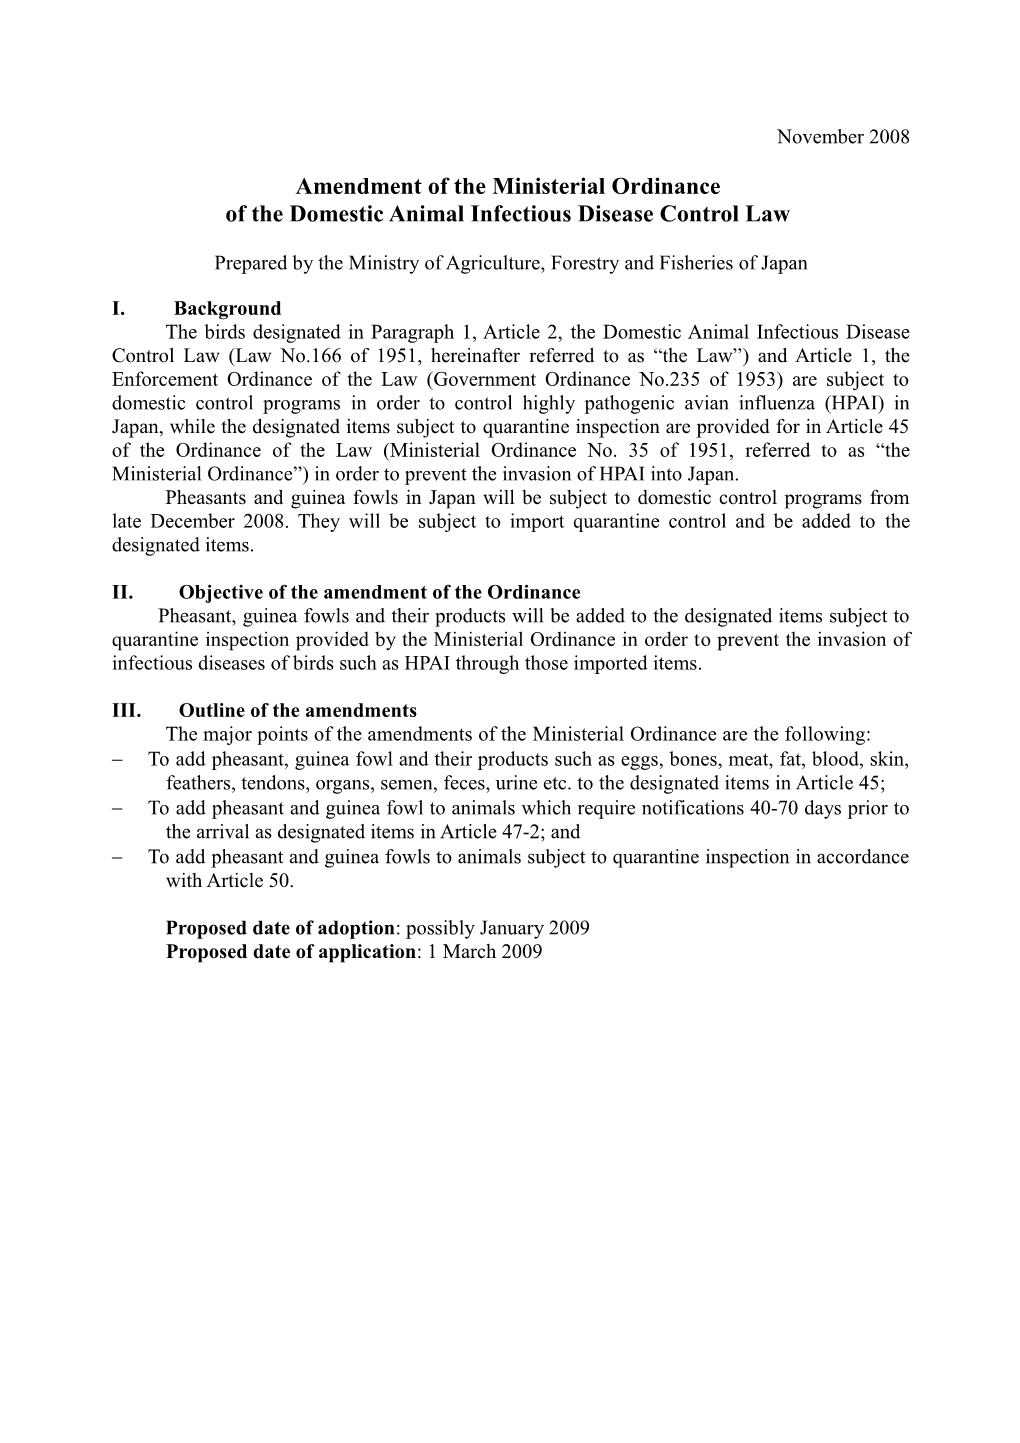 Amendment of the Ordinance of the Export - Import Quarantine of Birds